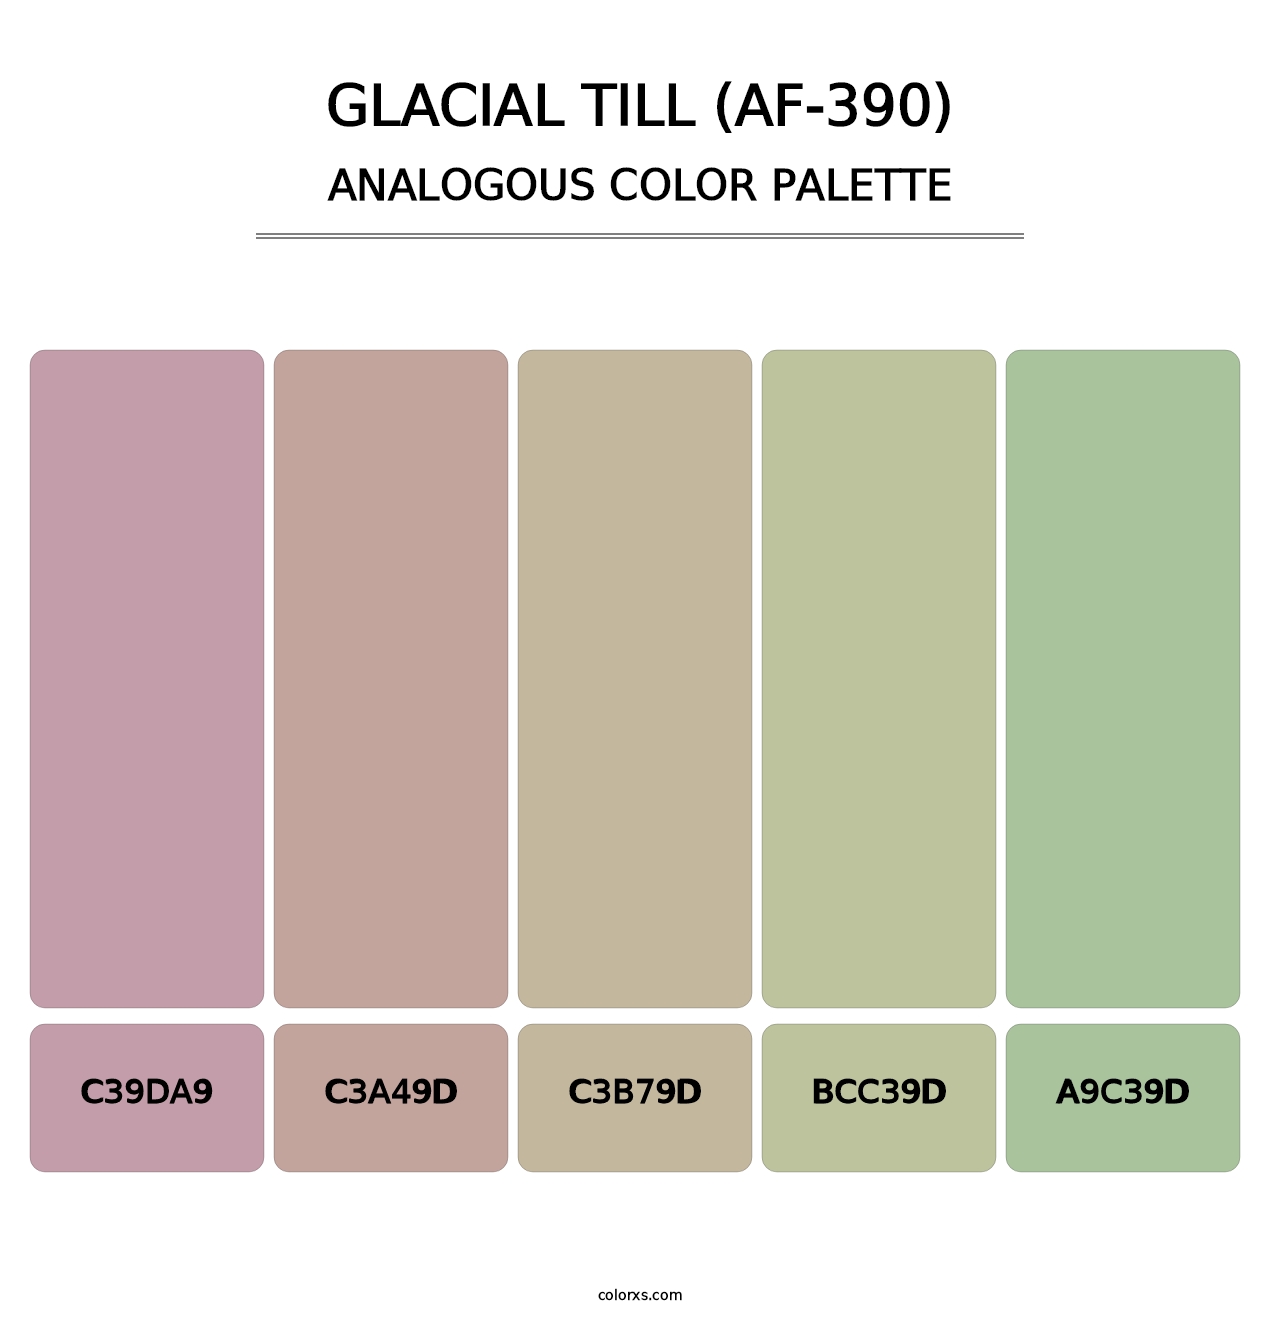 Glacial Till (AF-390) - Analogous Color Palette